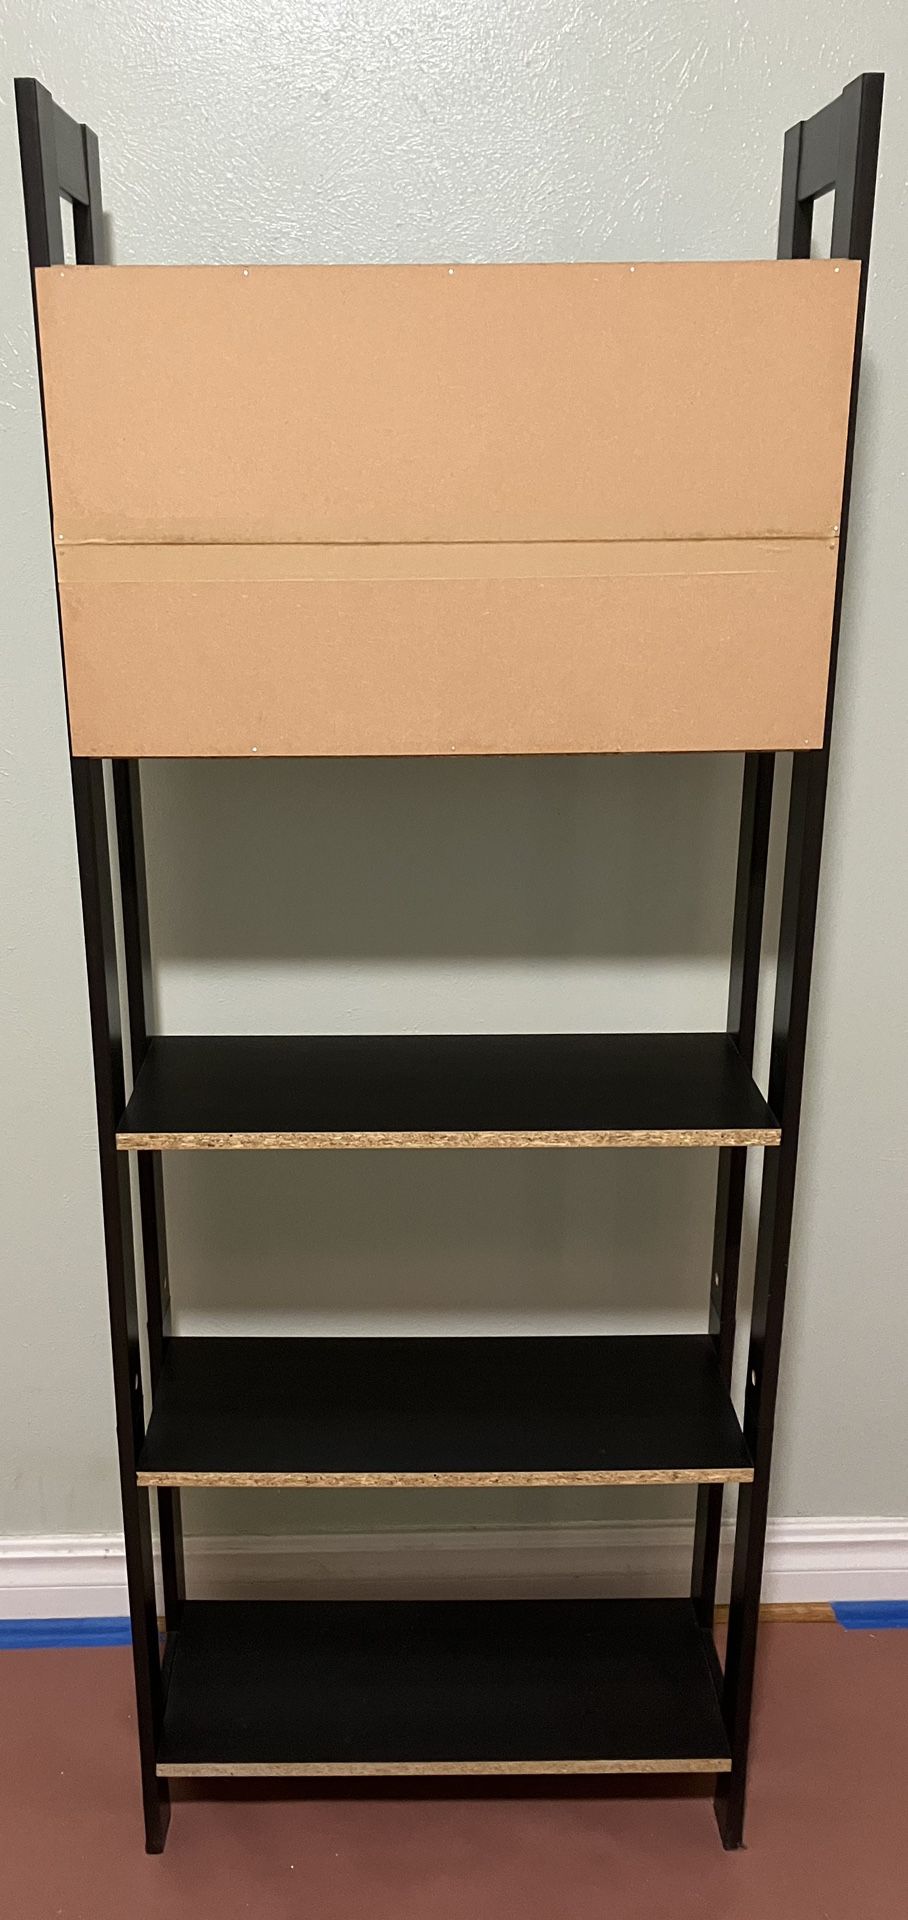 New IKEA Bookcase, 5 Shelf Bookshelf [5 Of 5]